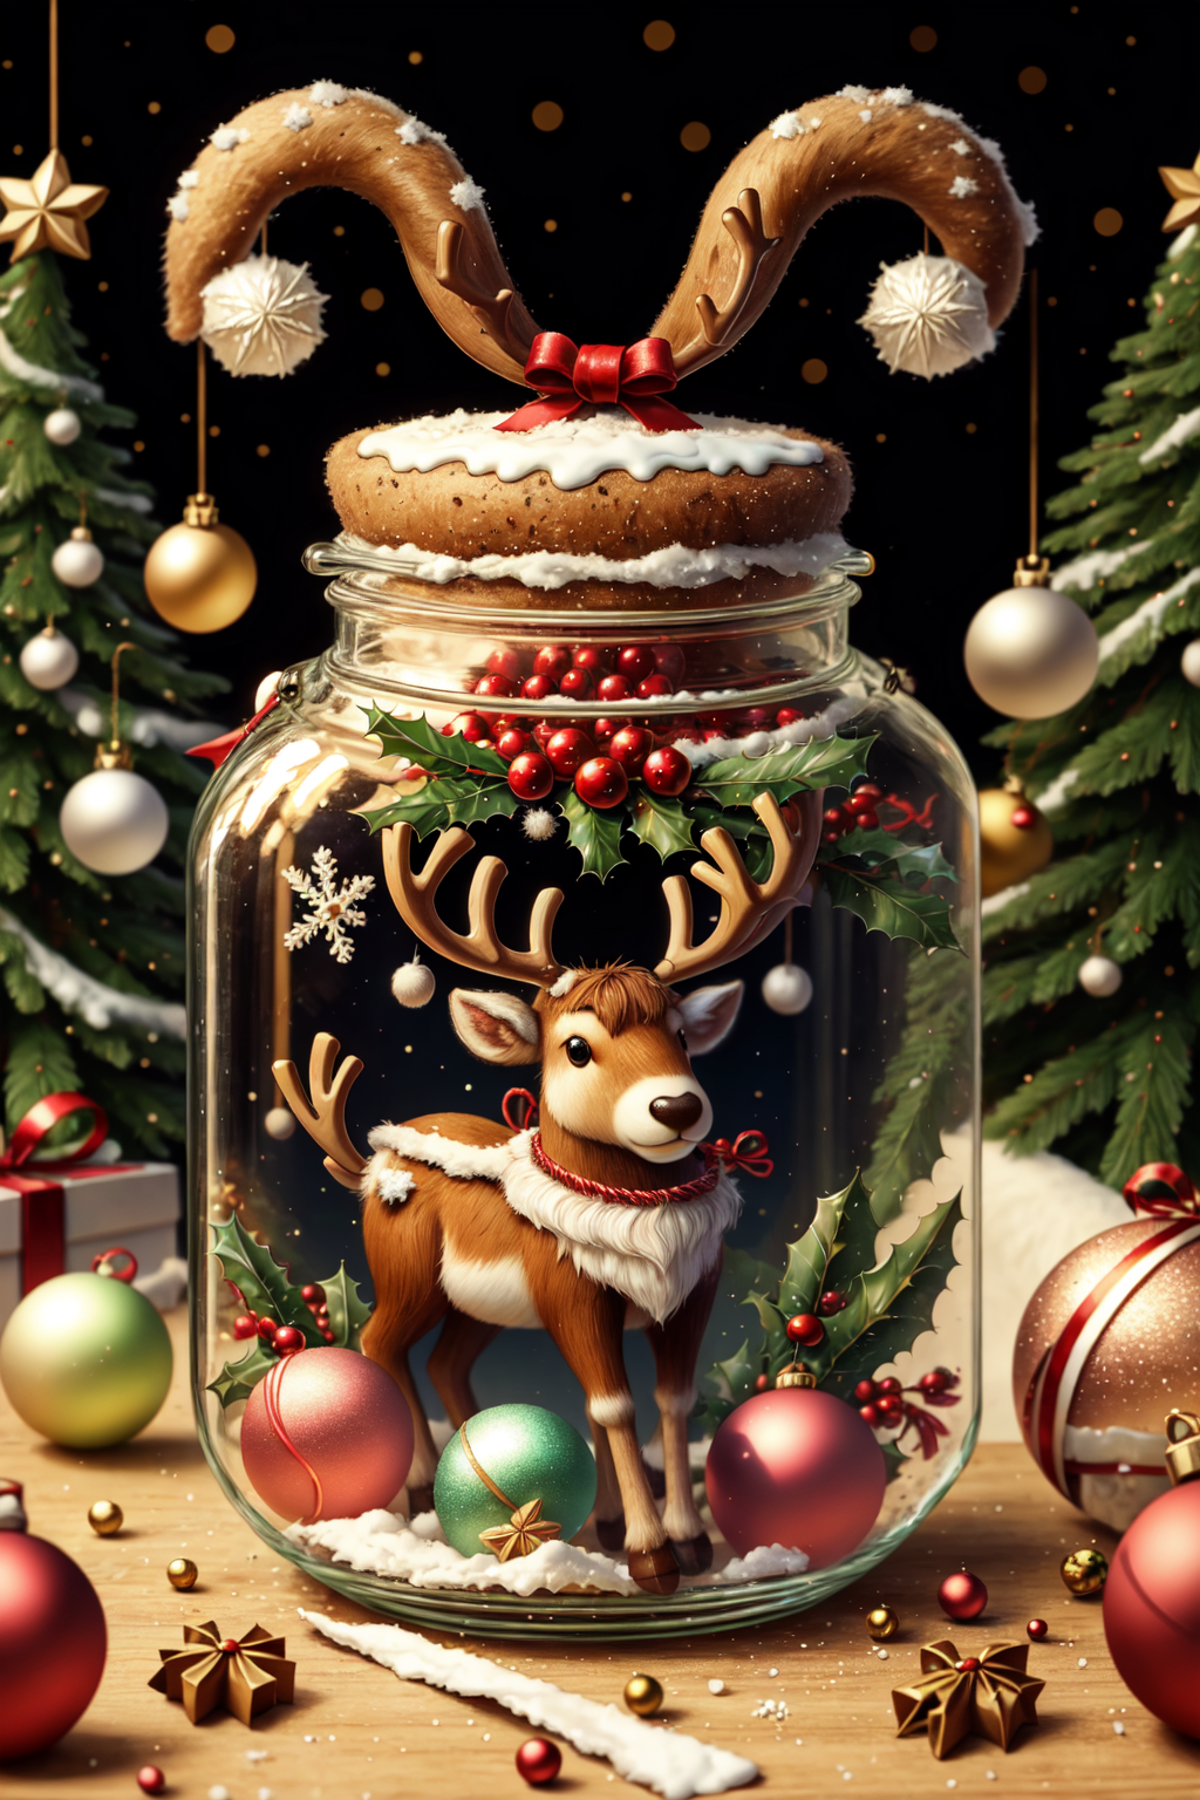 Christmas Food (Cook a Reindeer) image by earthnicity